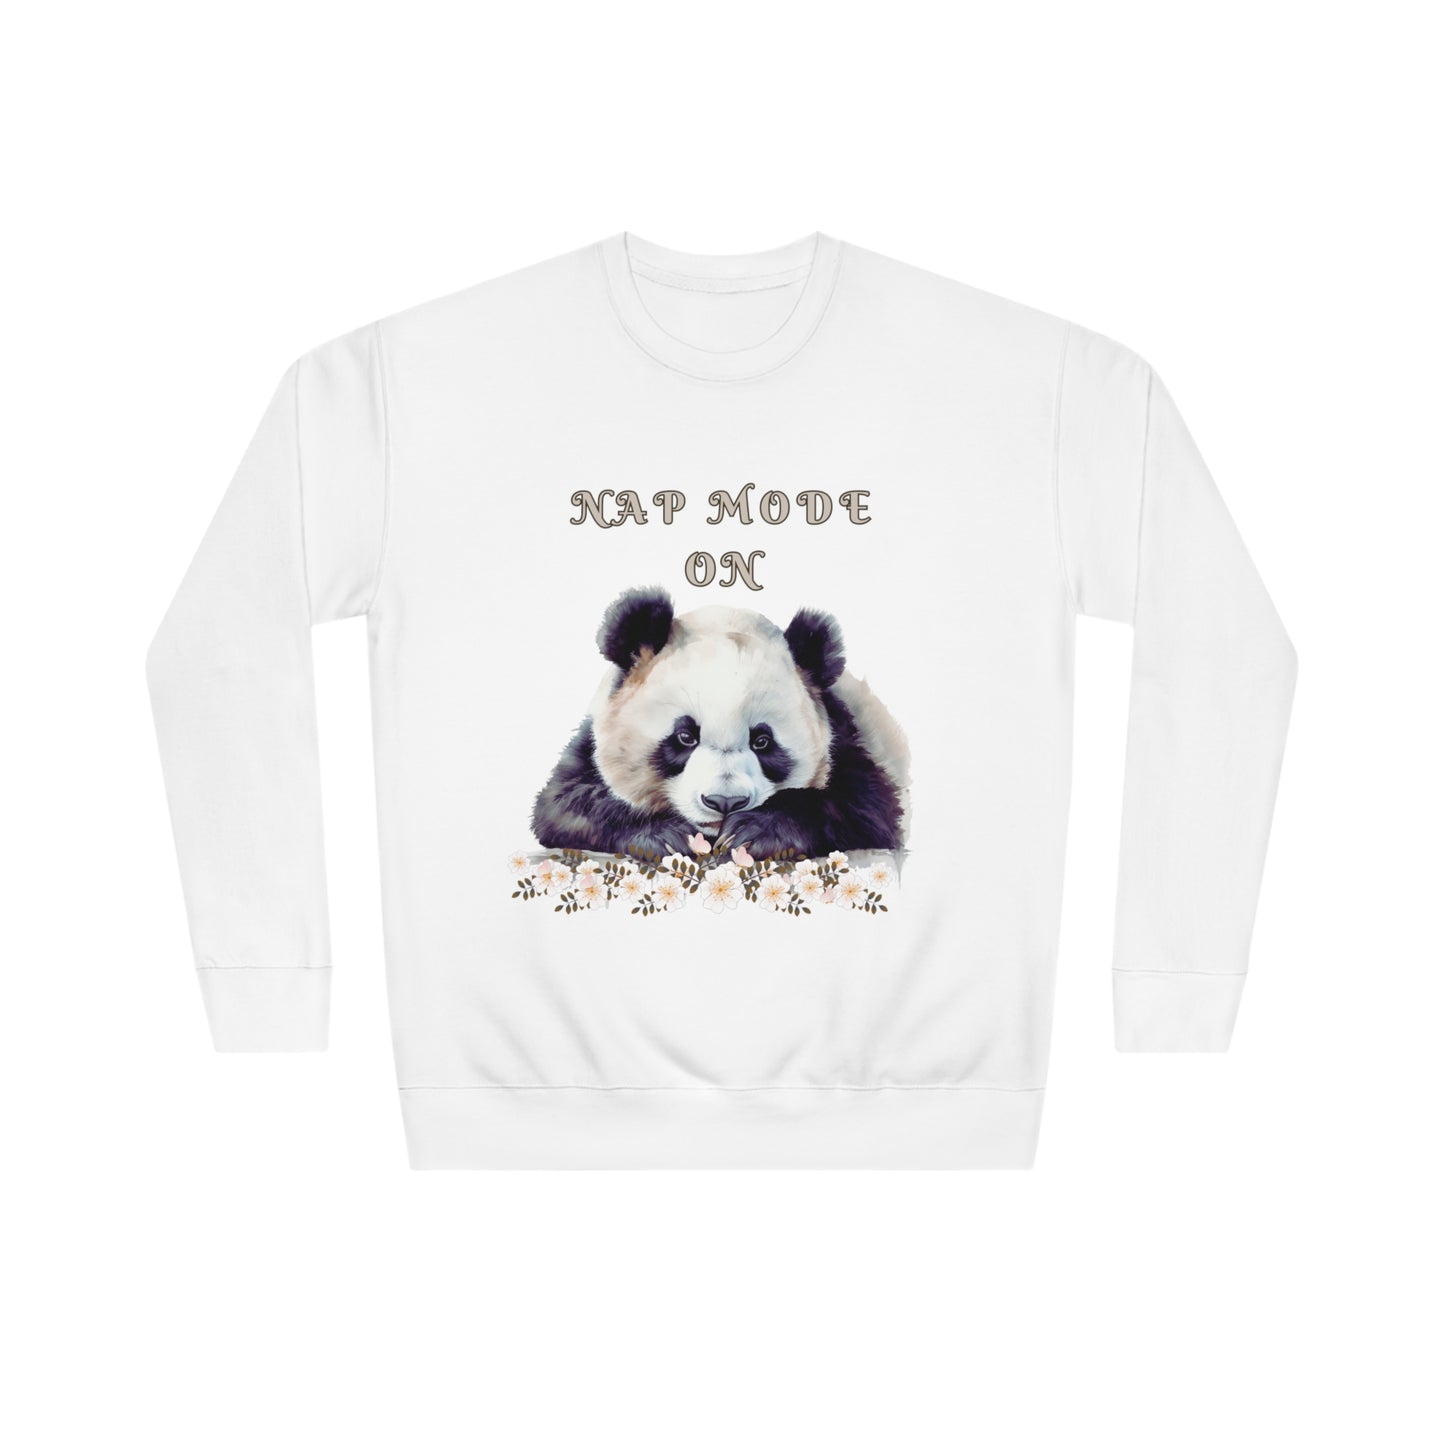 Lazy Panda Nap Mode Sweatshirt | Embrace Cozy Relaxation | Panda Lover Gift - Cozy Sweatshirt Sweatshirt White S 